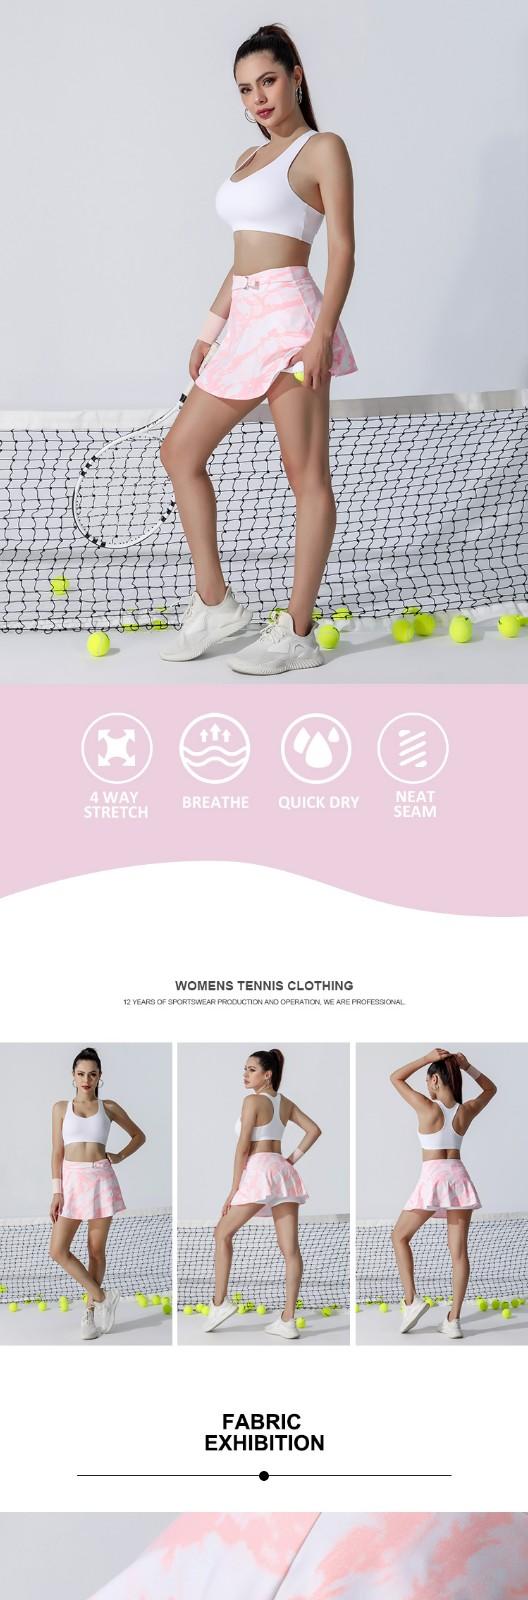 INGOR custom tennis wear ladies supplier for women